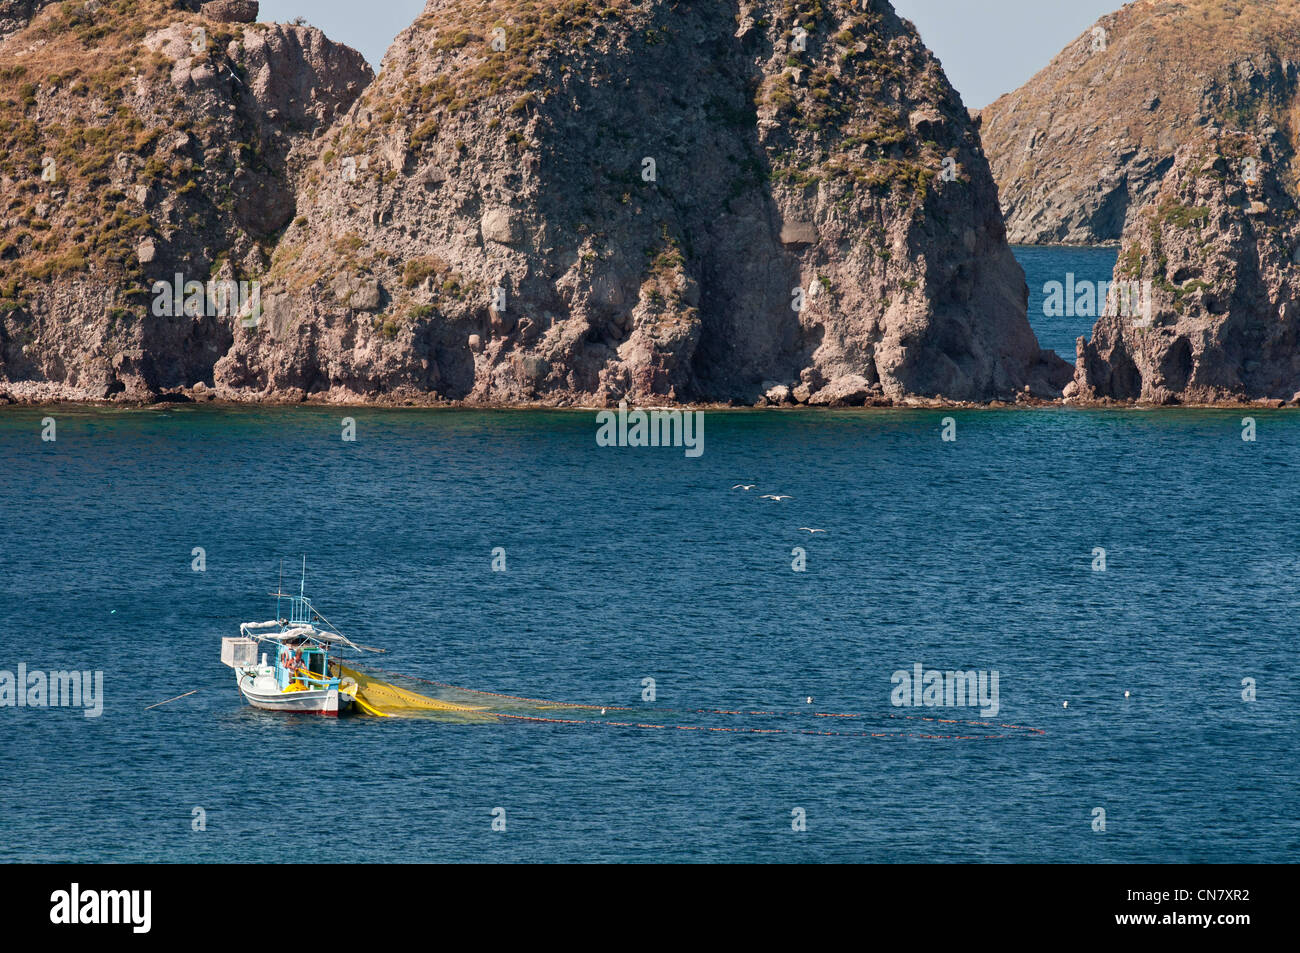 Greece, Lemnos Island, Myrina, capital town and main harbour of the island, a fishing boat Stock Photo